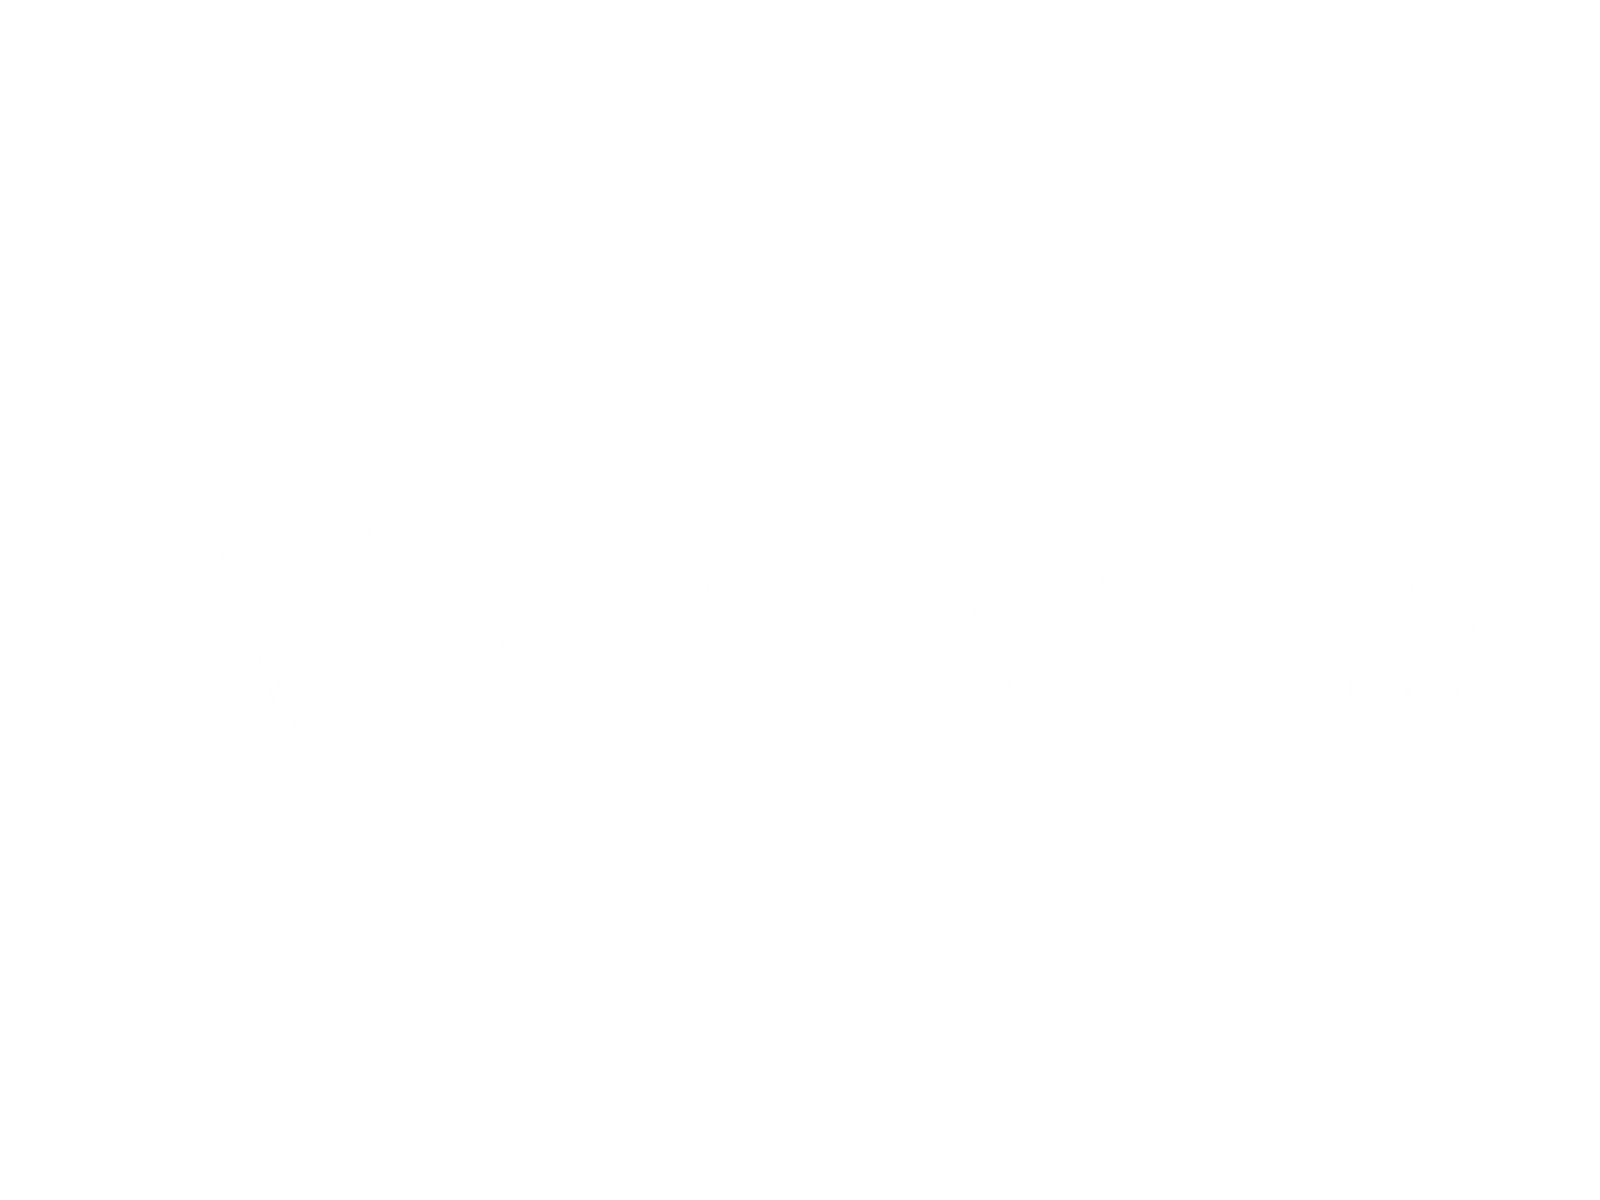 Virti Games